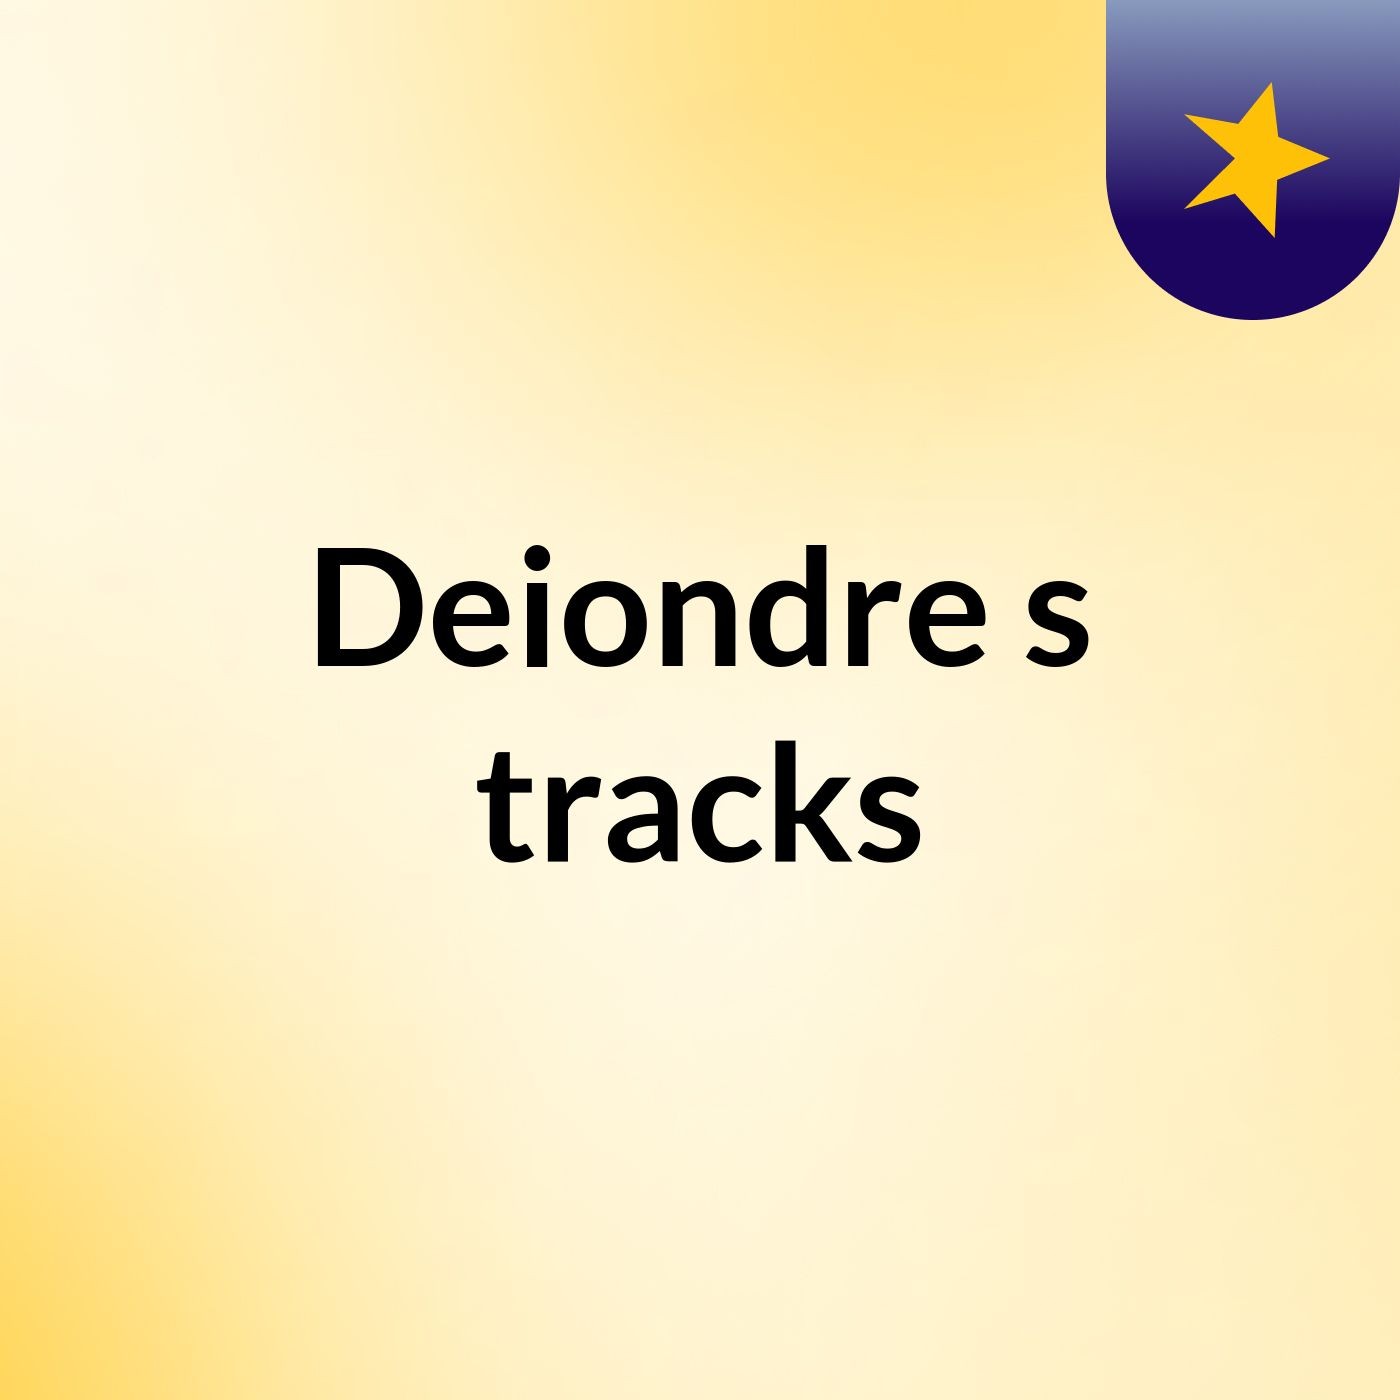 Deiondre's tracks